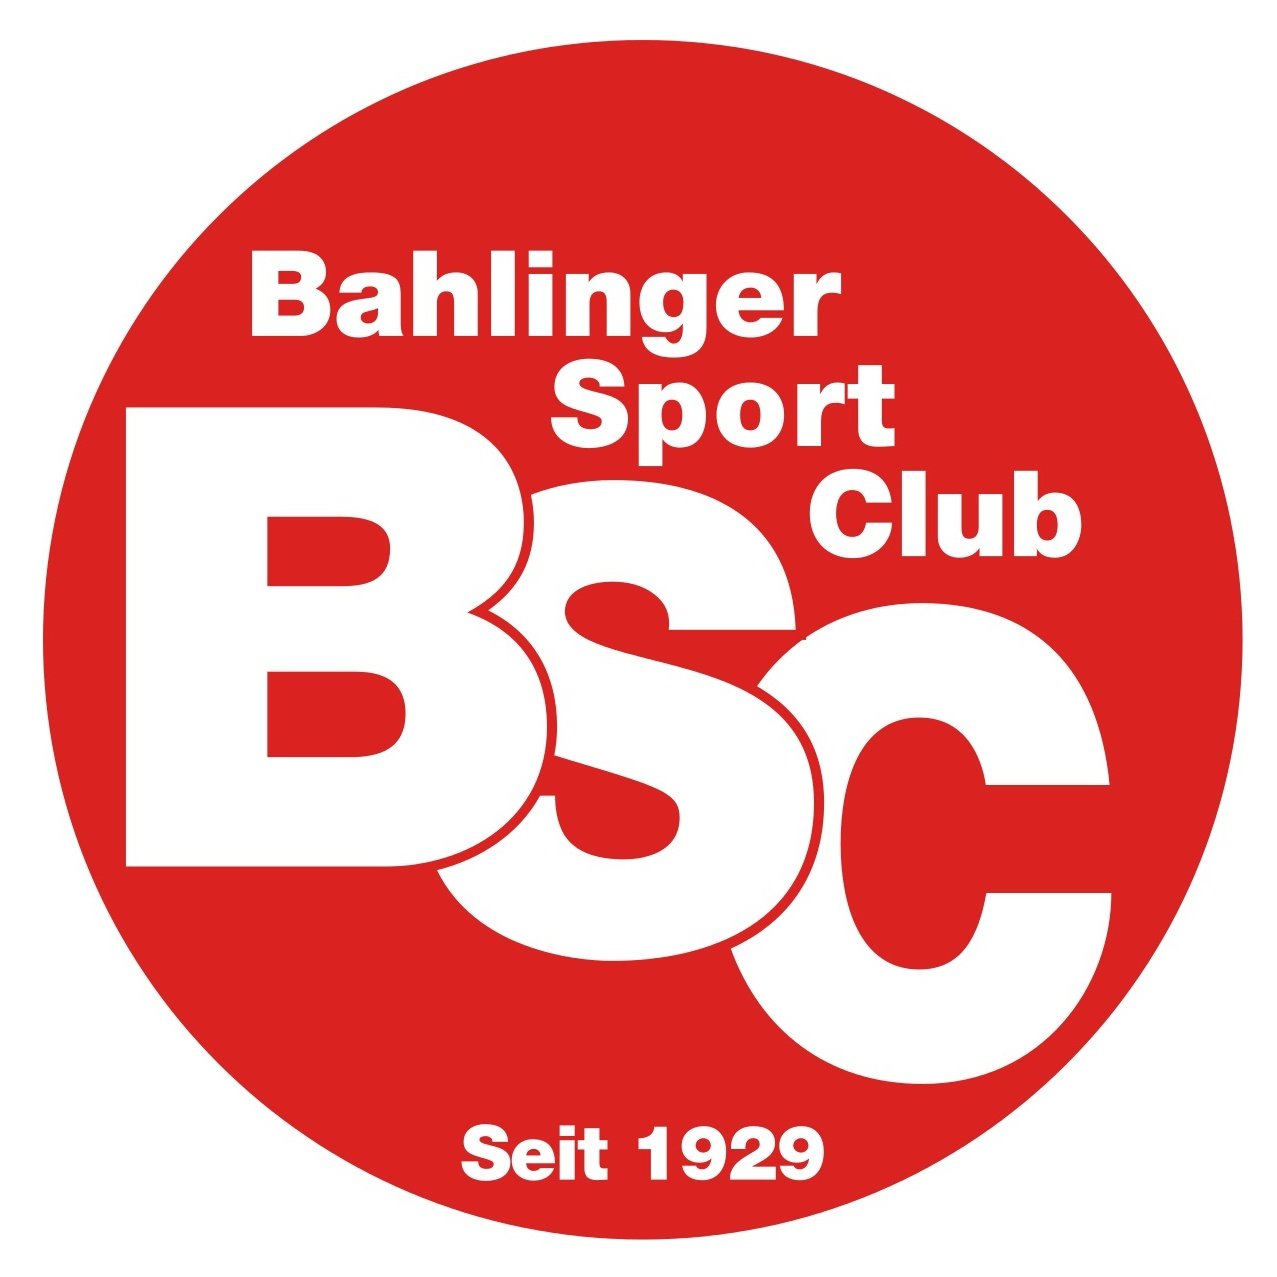 Escudo del Bahlinger Sub 19